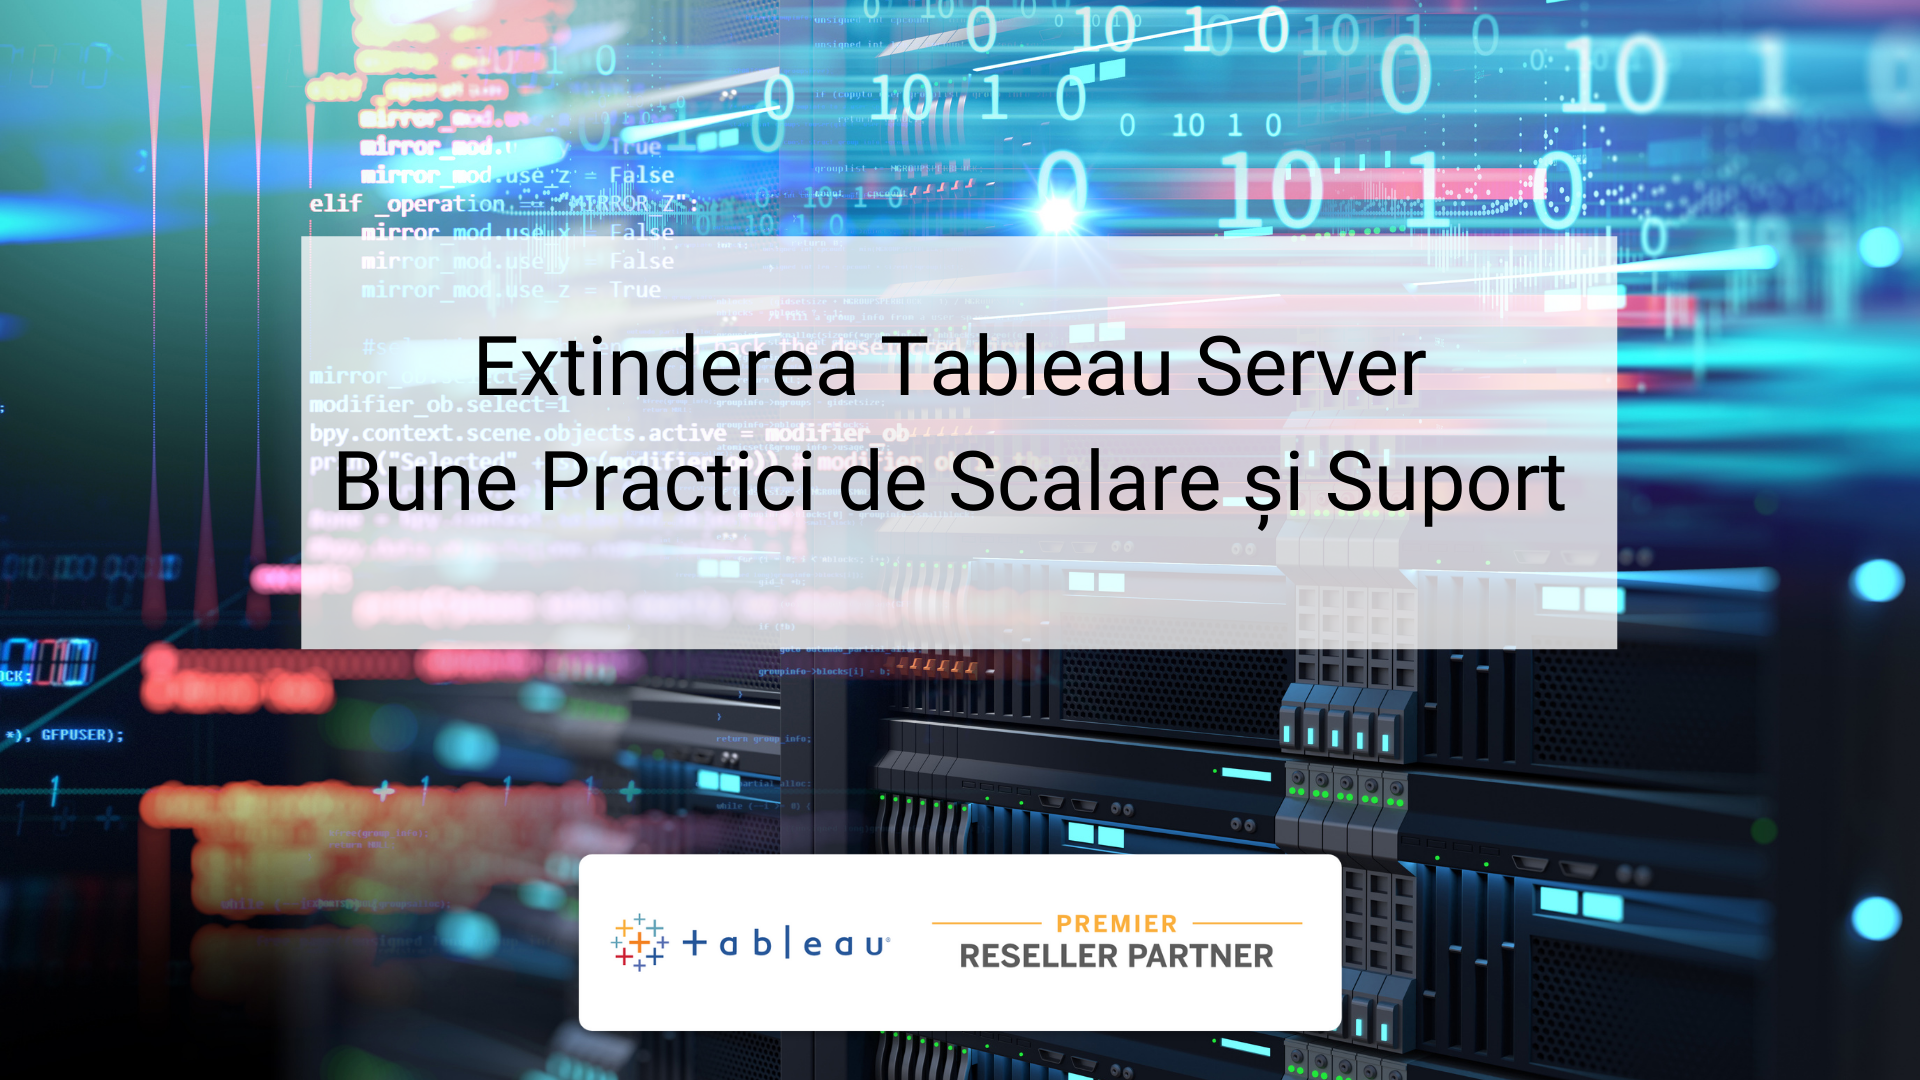 Extinderea-Tableau-Server